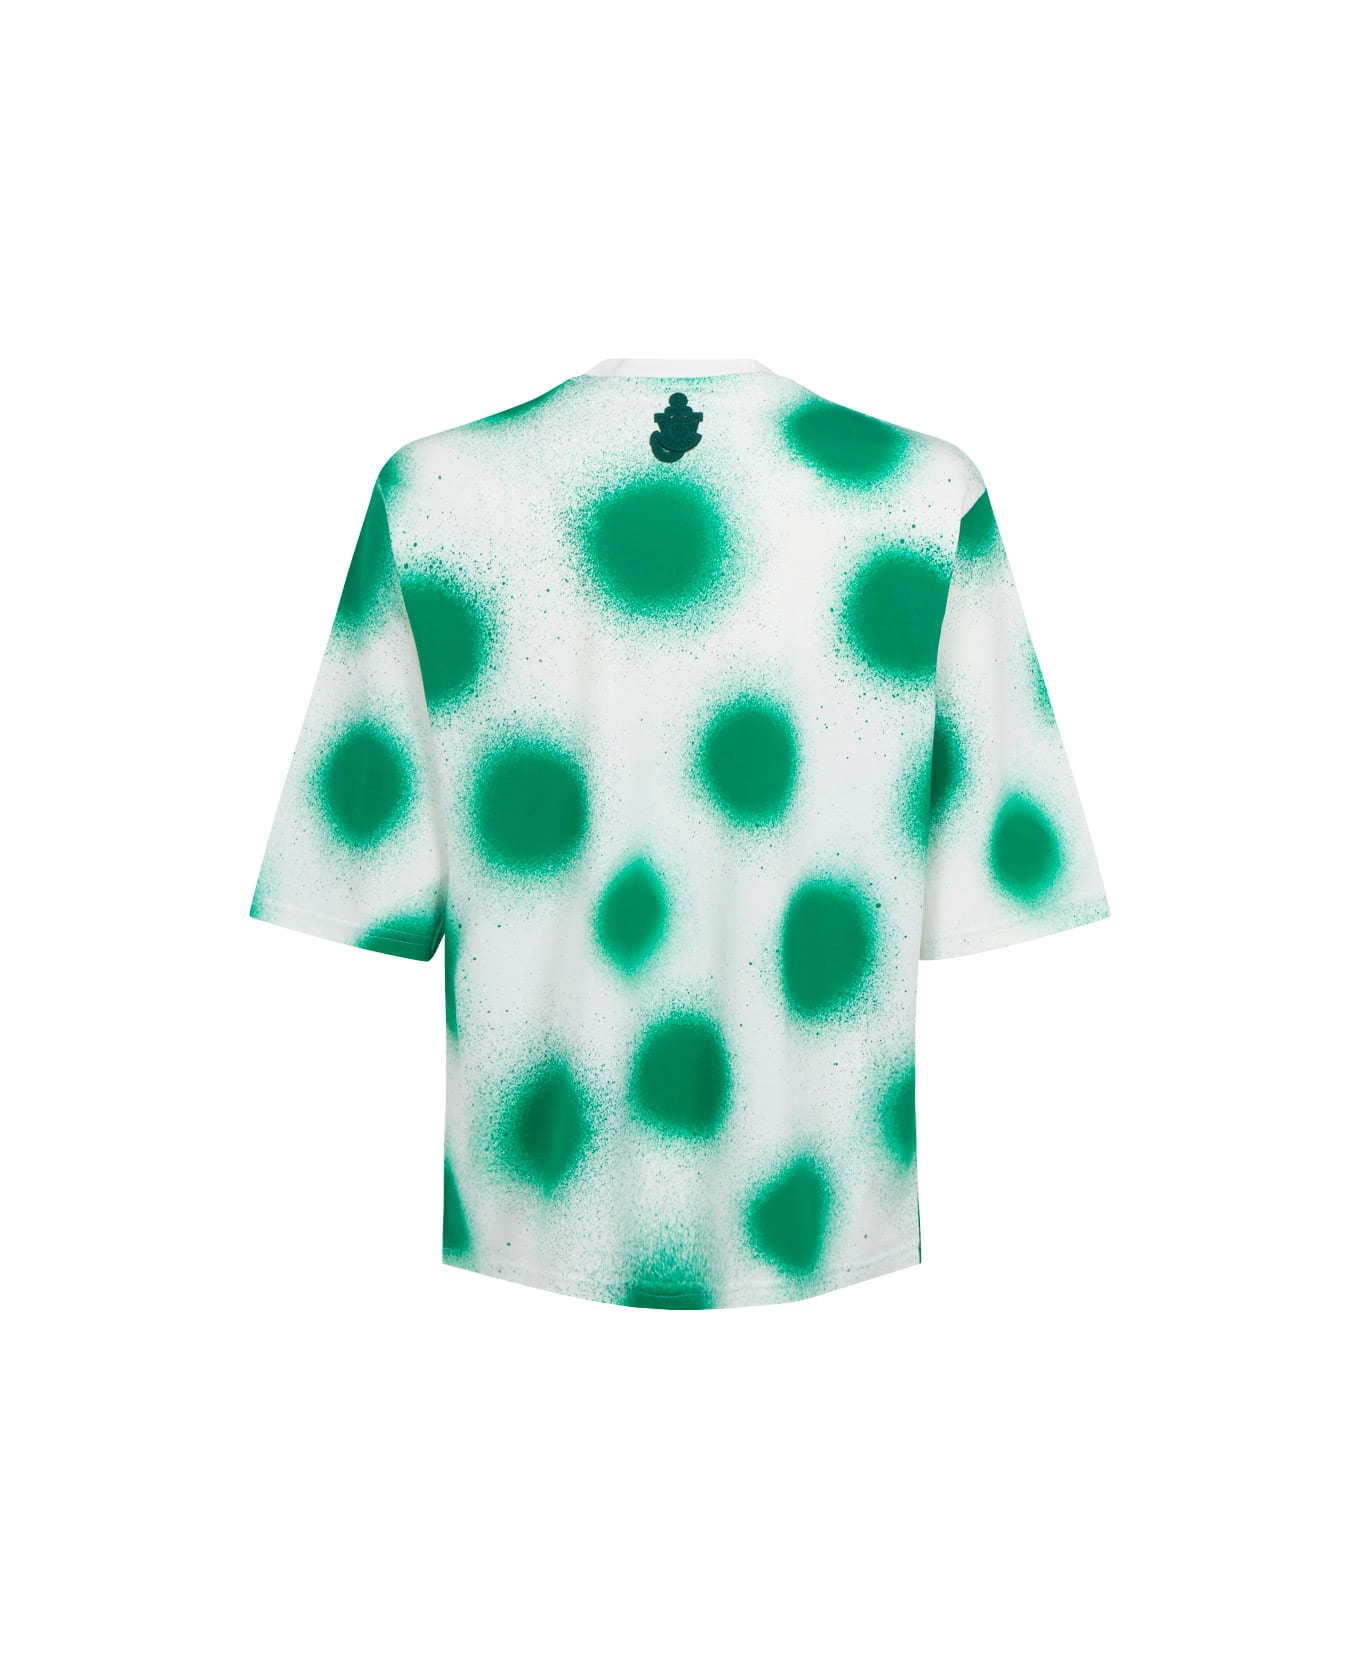 Moncler Genius T-shirt - Bianco/verde Tシャツ